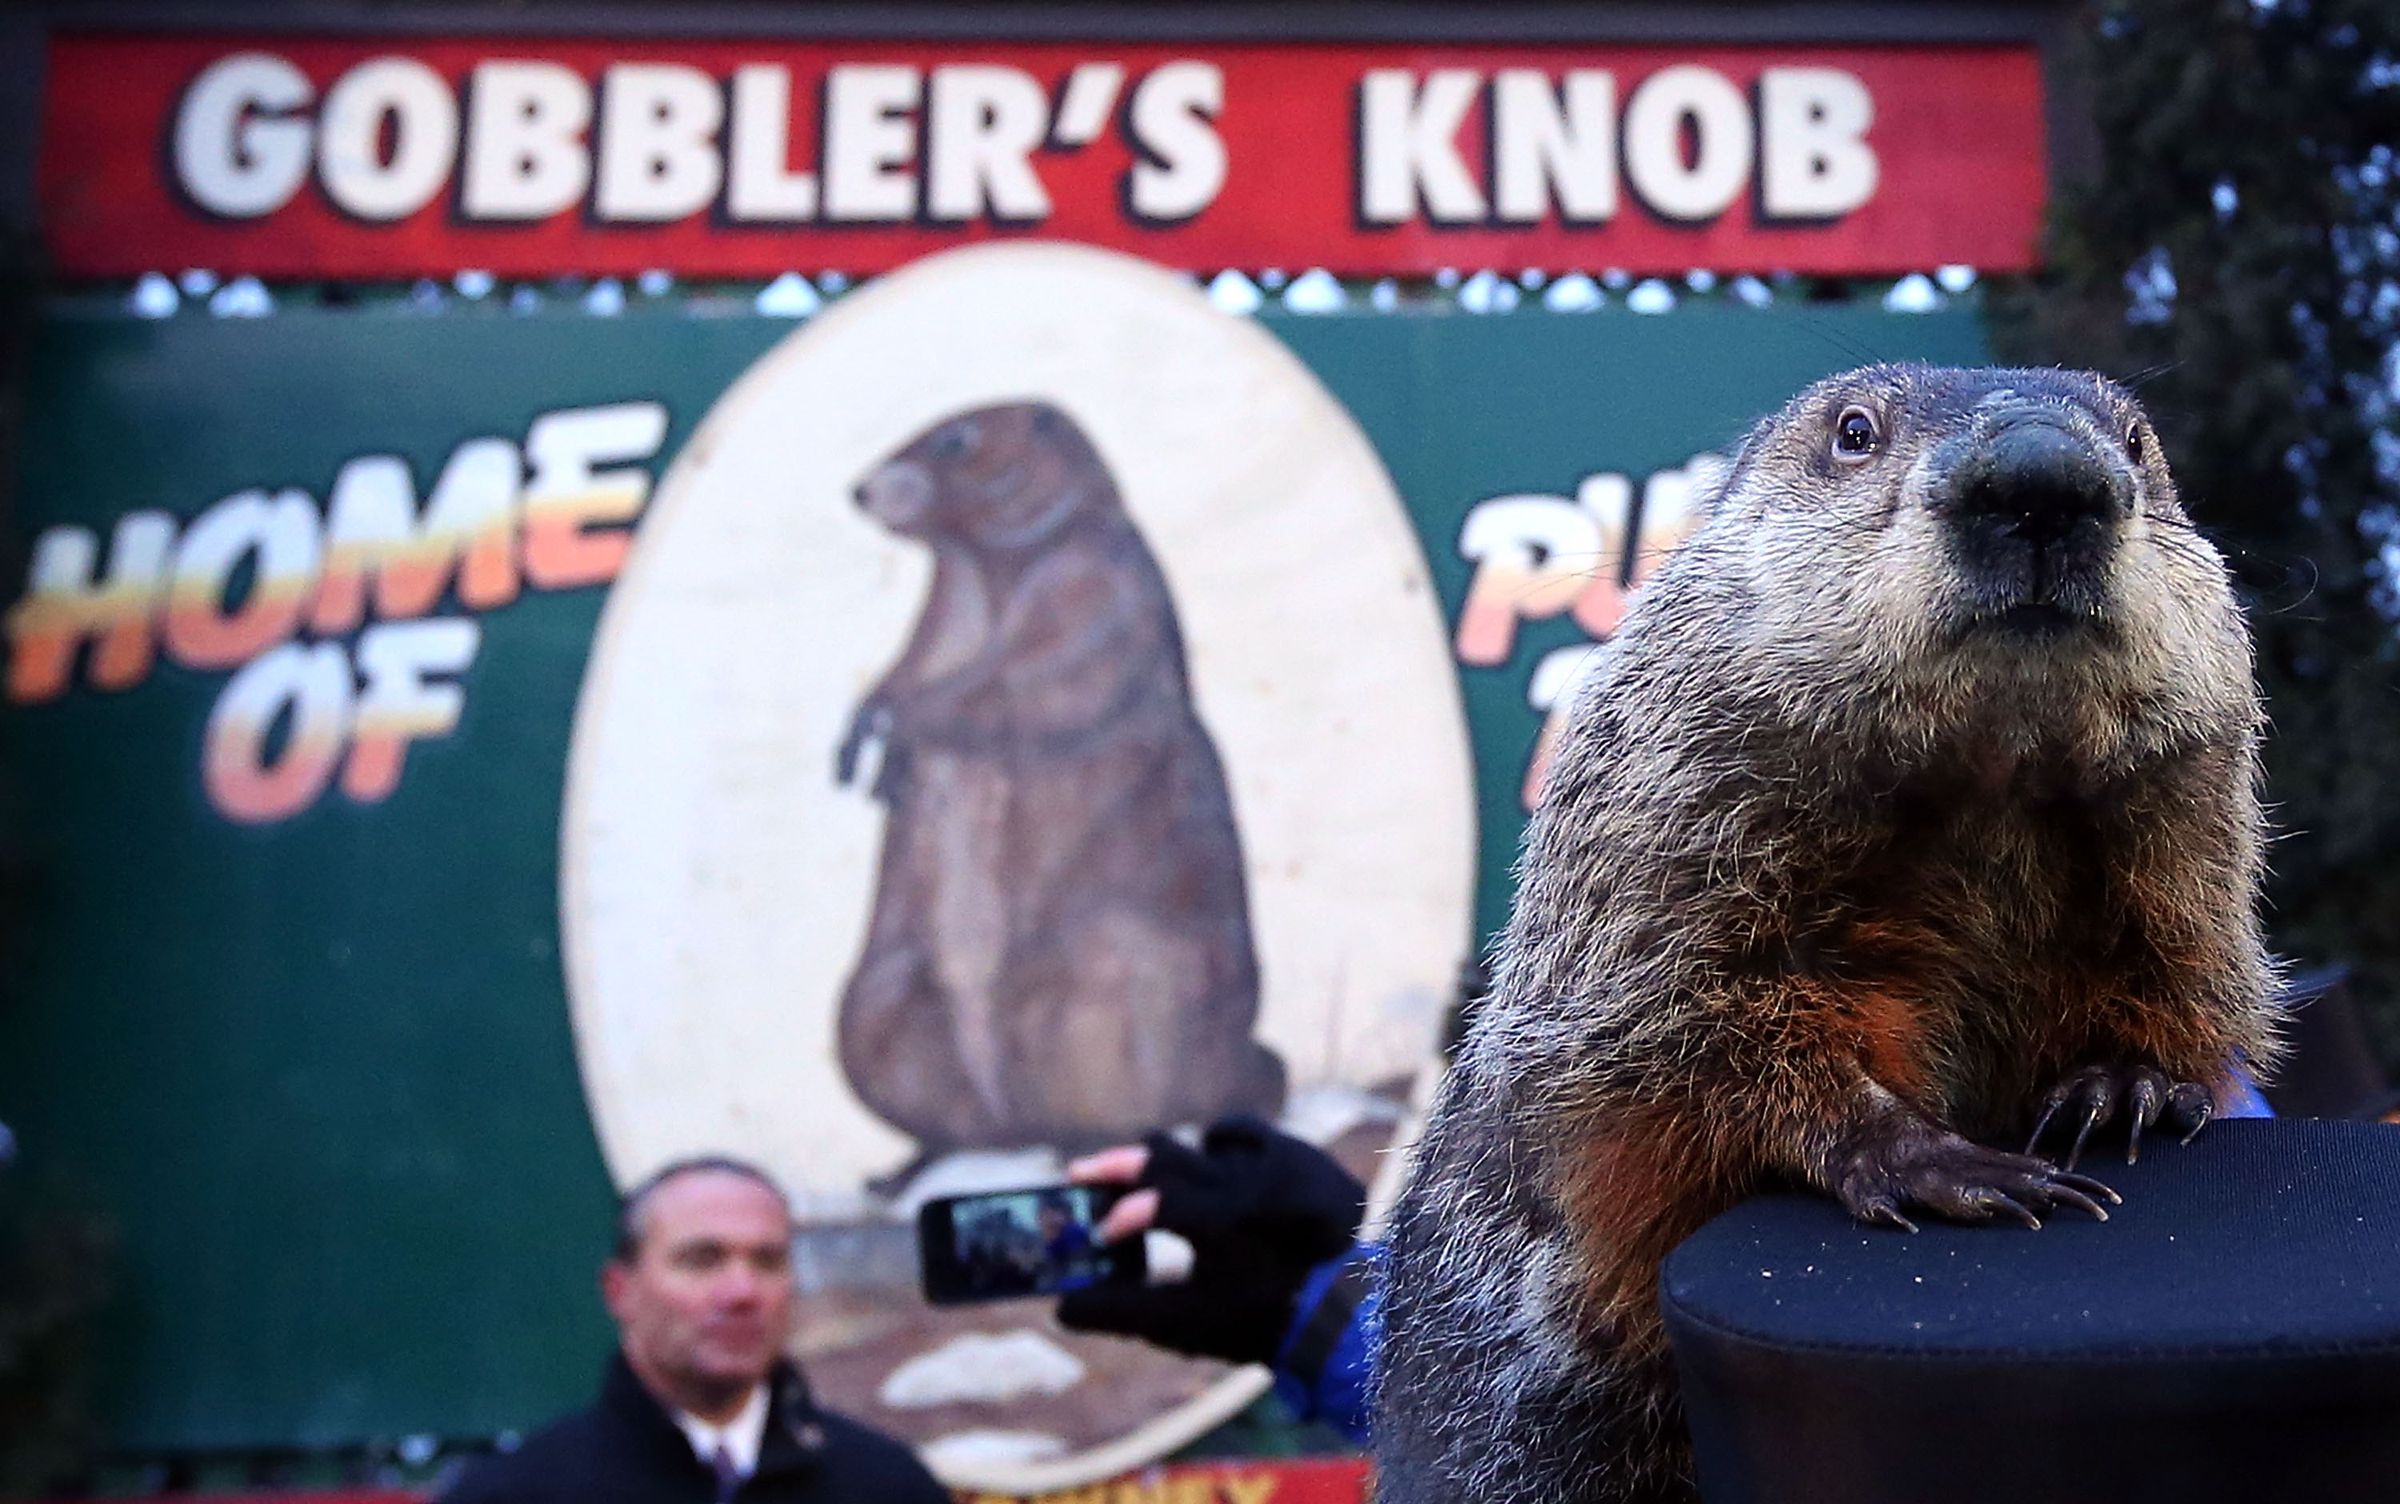 Annual Groundhog’s Day Ritual Held In Punxsutawney, Pennsylvania